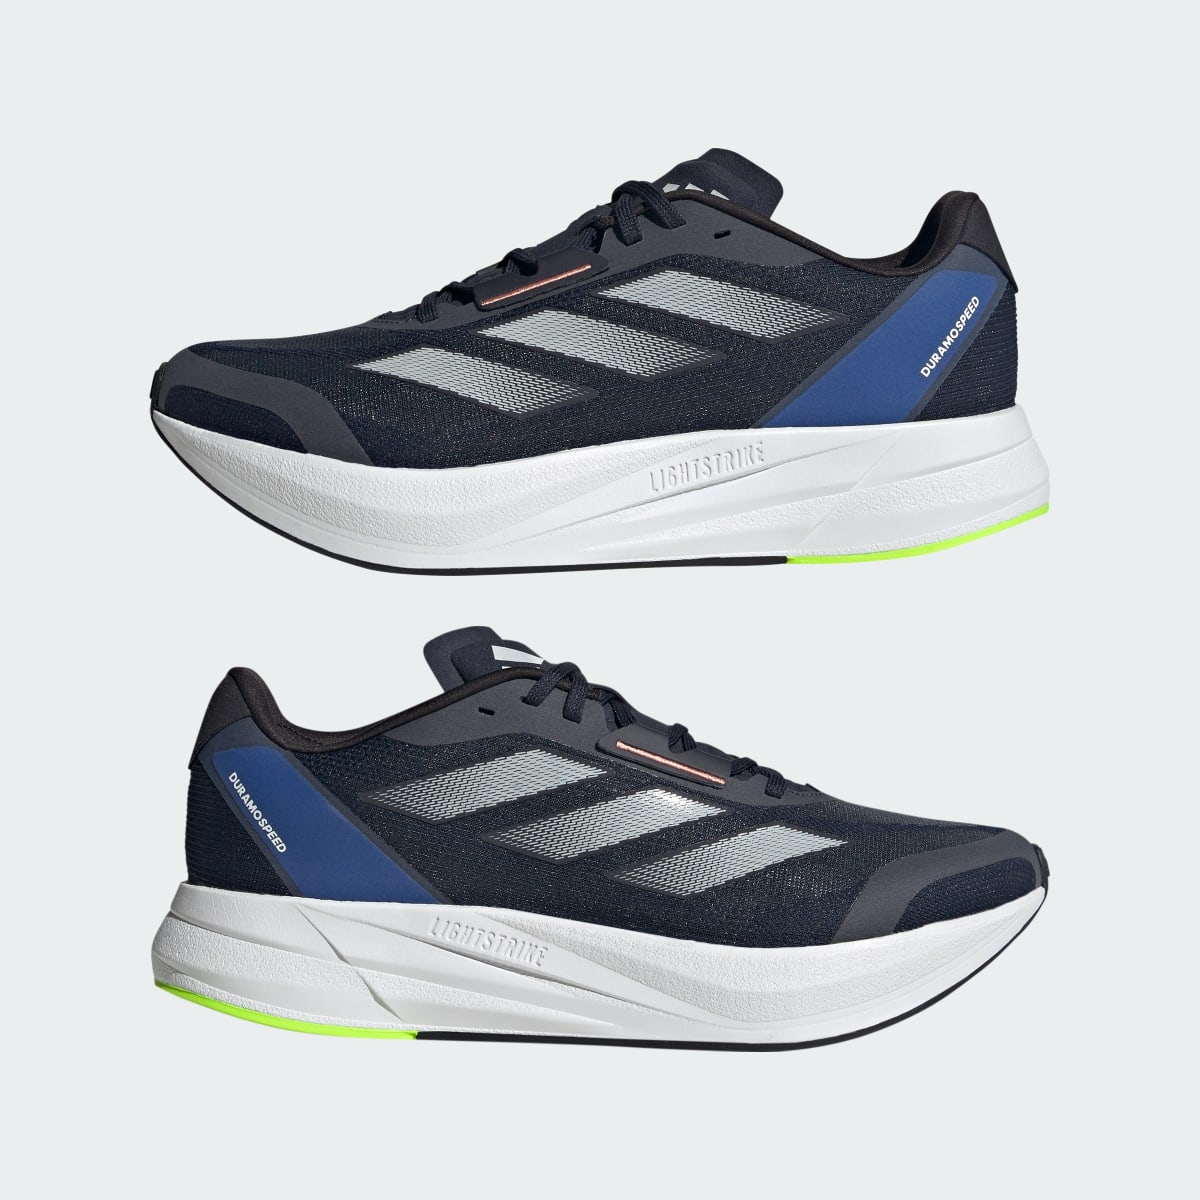 Adidas Duramo Speed Shoes. 11